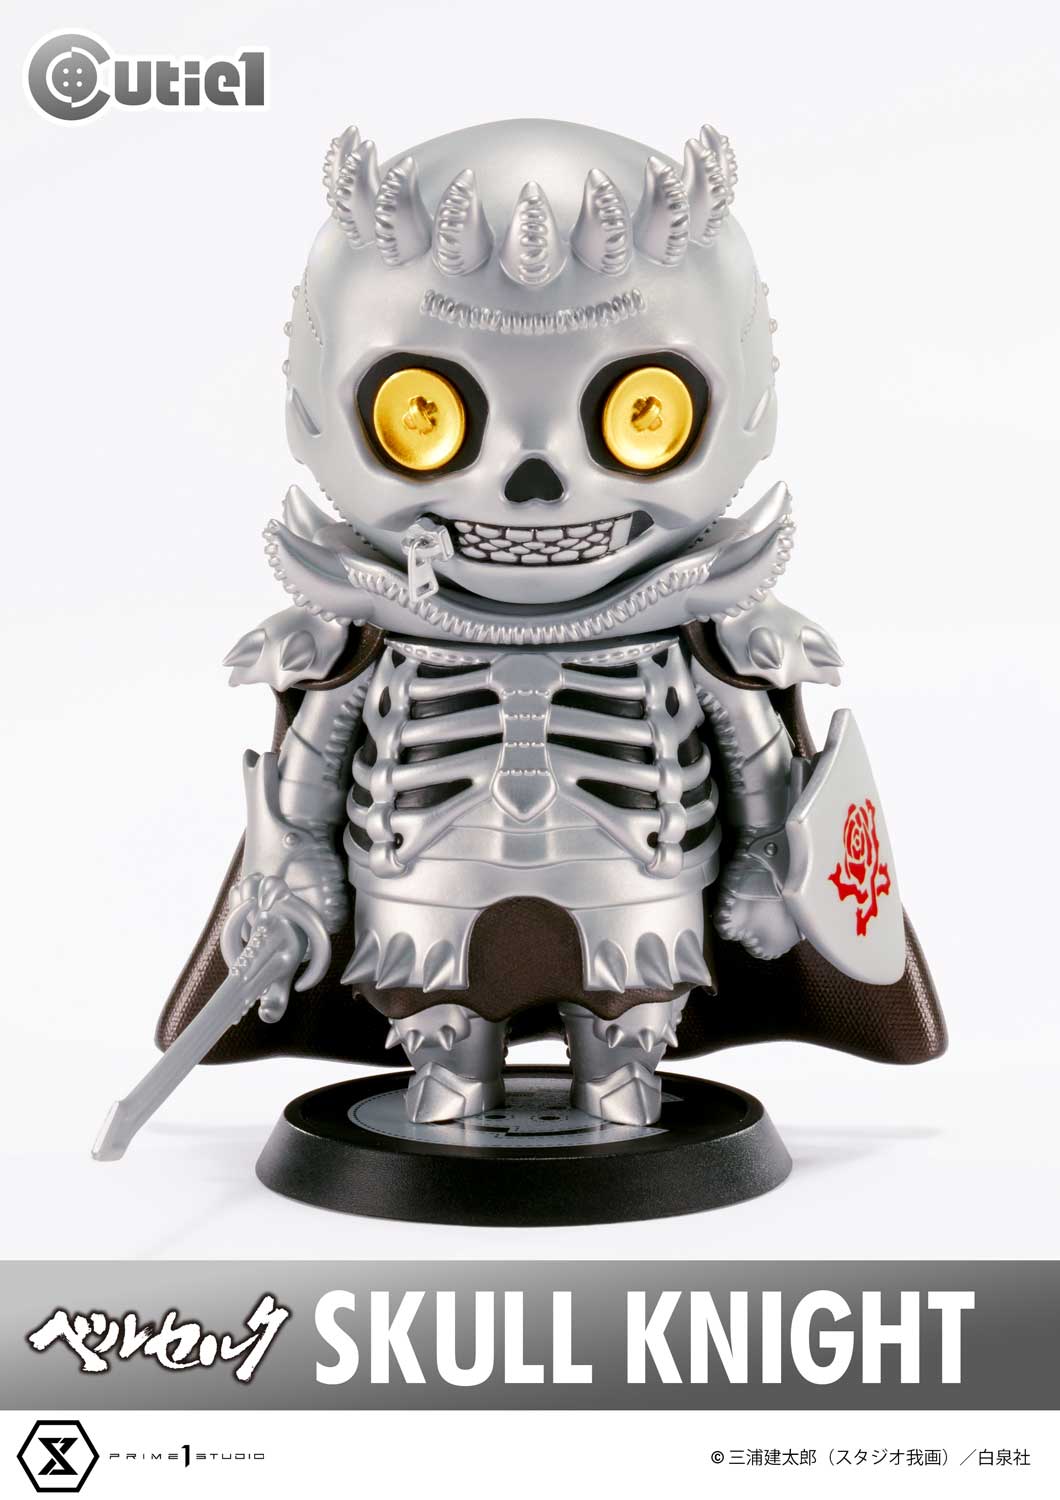 ultra-tokyo-connection-pvc-scale-figures-berserk-skull-knight-cutie1-figure-28713657860140_2000x2000.jpg